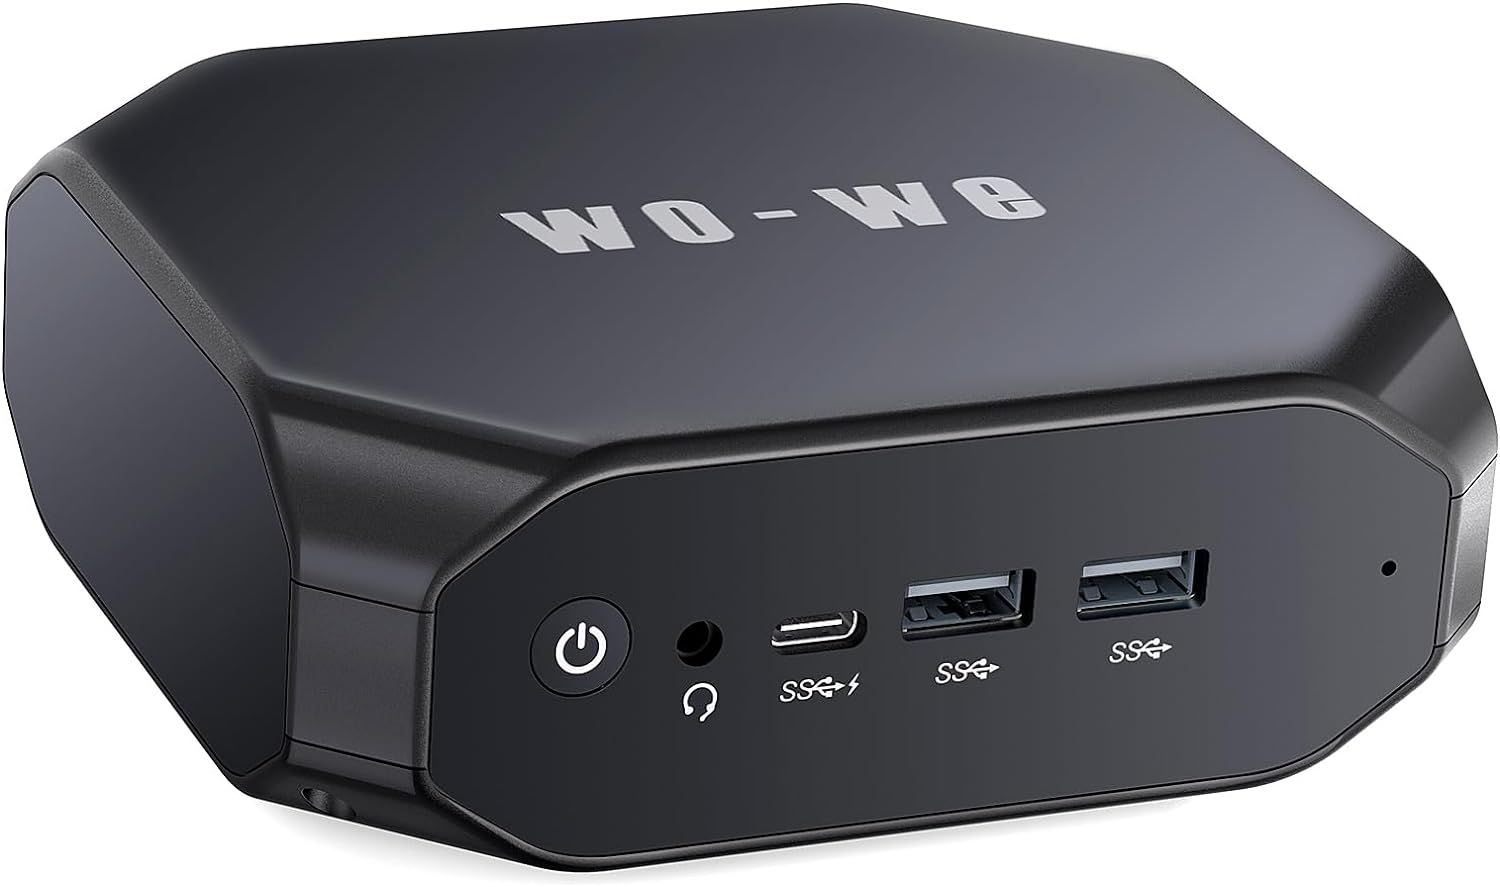 wowe Mini PC with AMD Excavator A9-9400, 8G DDR4, 128G SSD, AMD Radeon R5 Series, Linux, Ubuntu-20.04.1, Supports 4K@30Hz HD Dual Display,2* HDMI 2.0,WiFi 5,USB 3.1